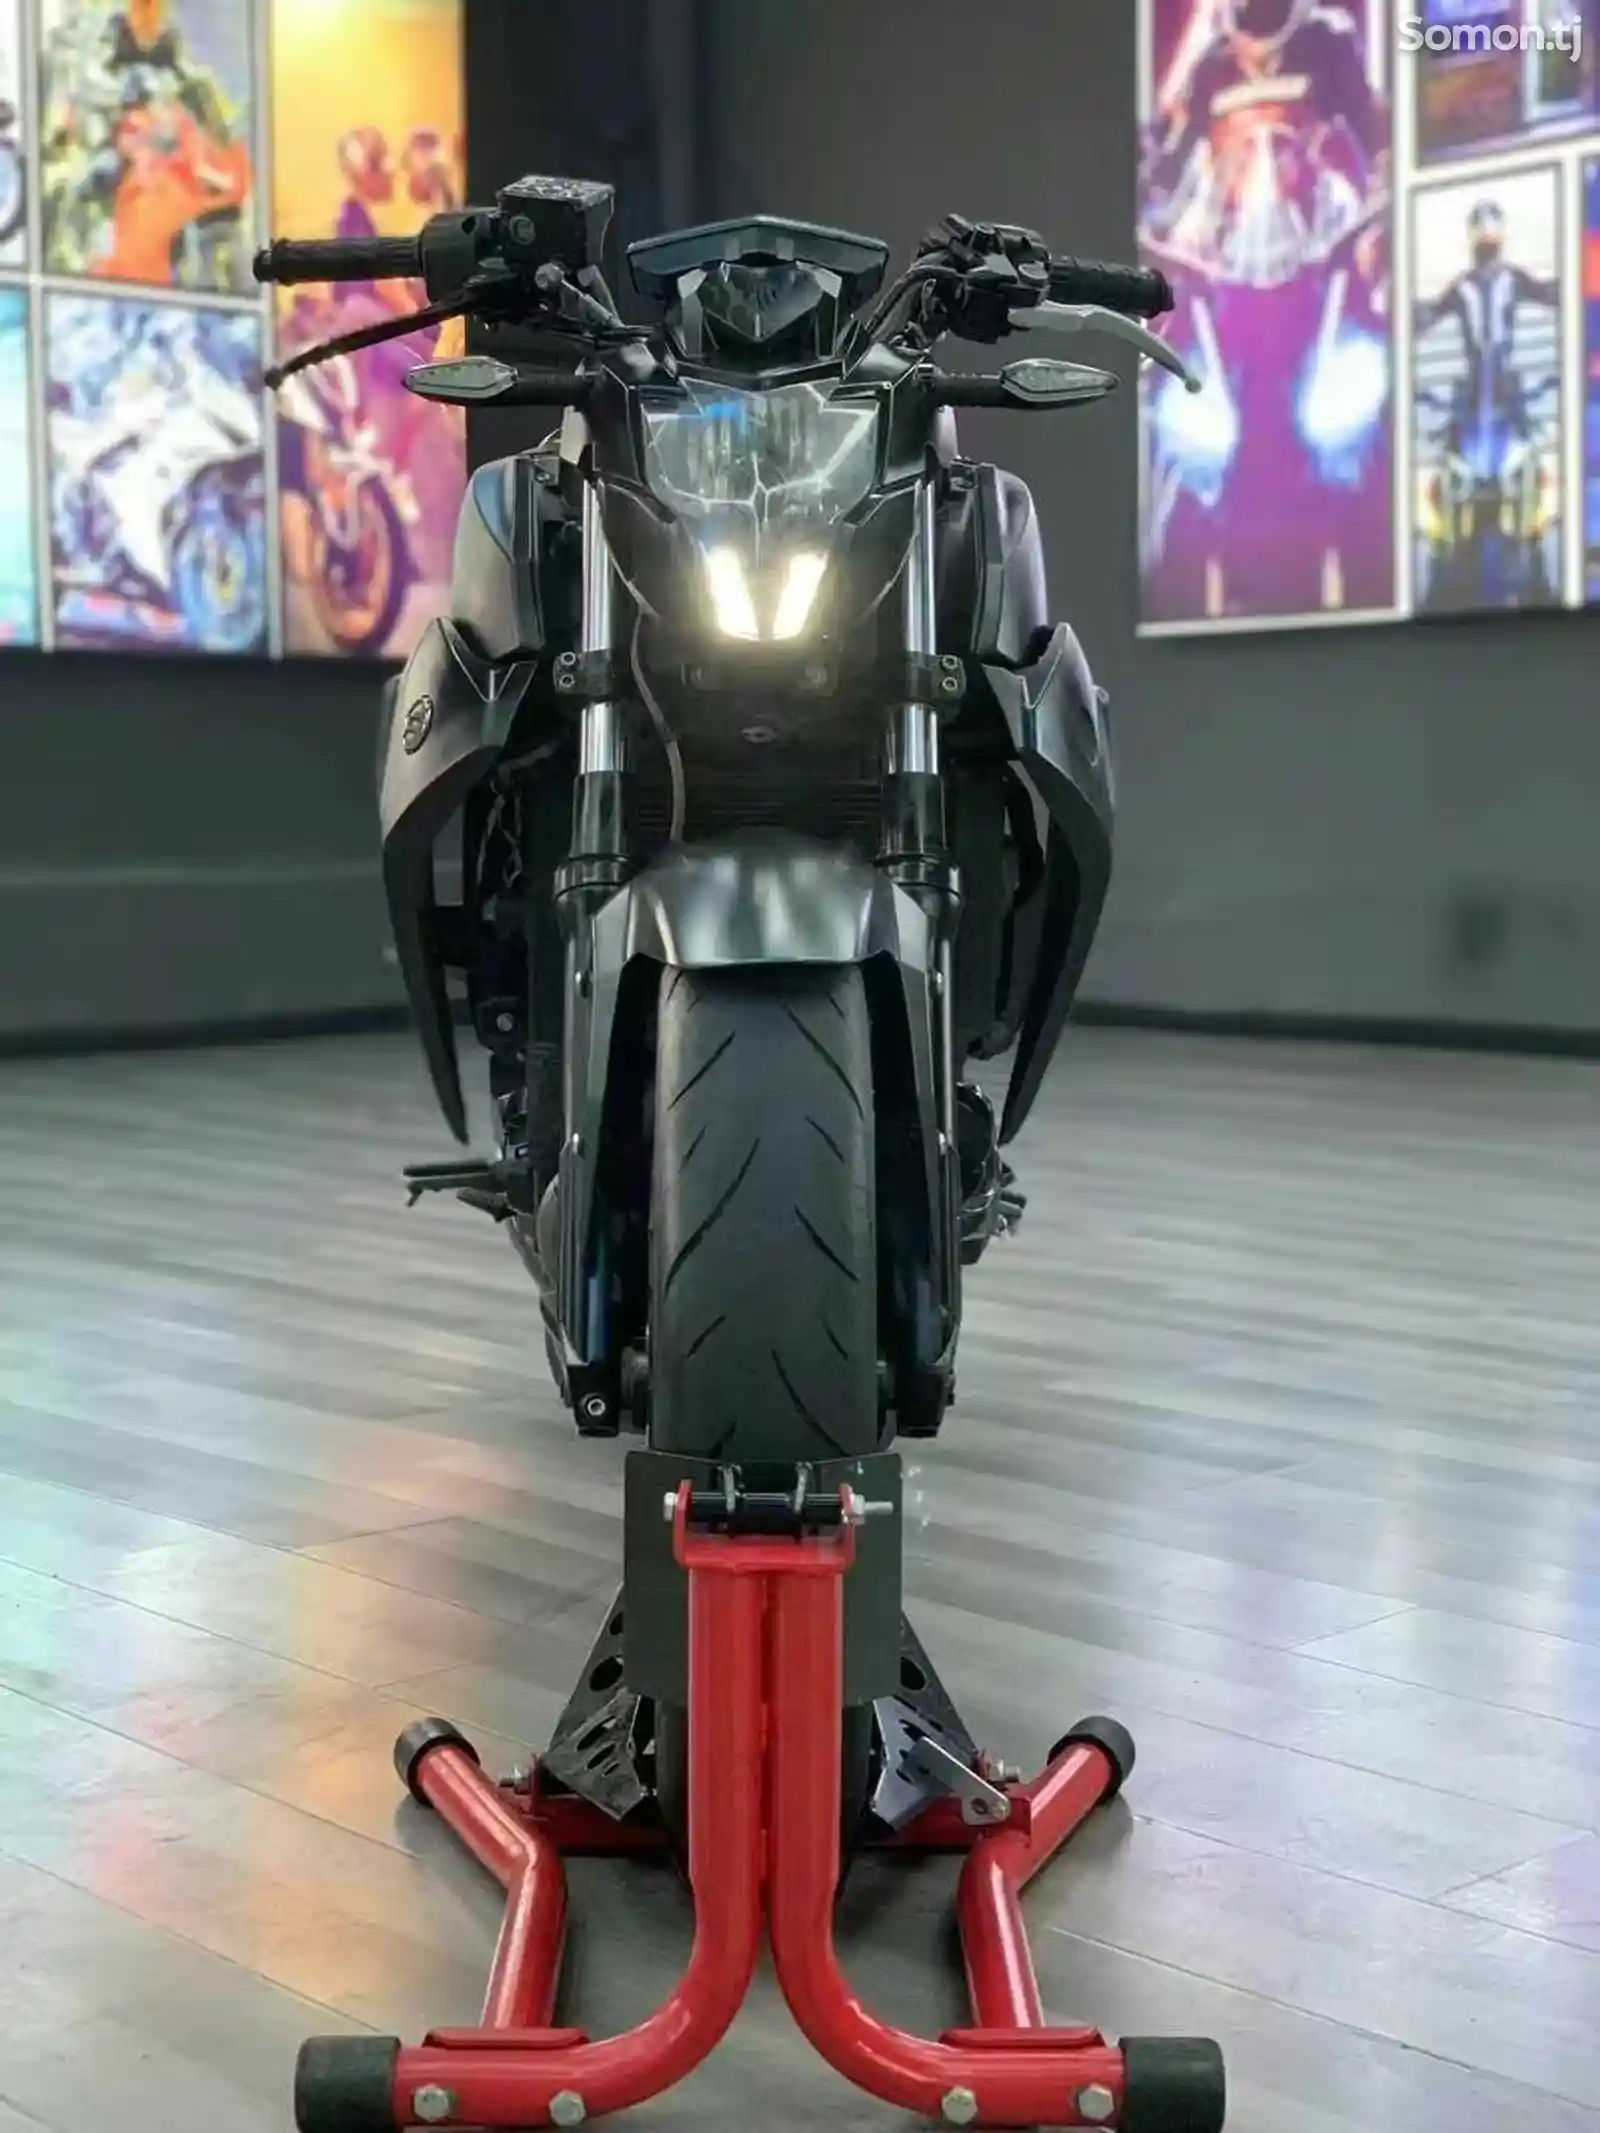 Мотоцикл Kawasaki 400cc на заказ-2